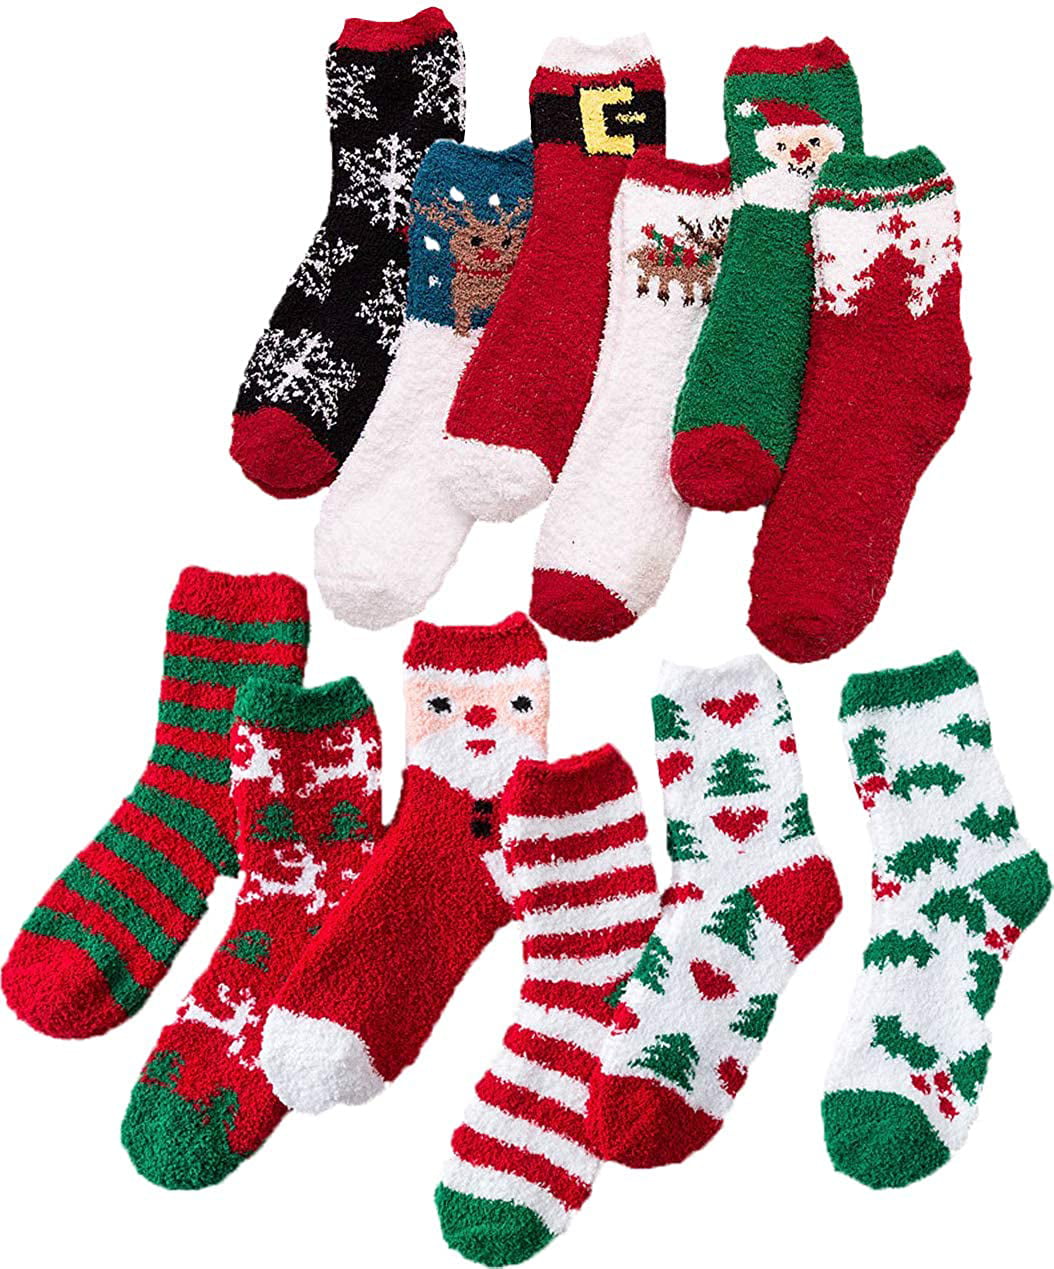 Christmas Holiday Fuzzy Socks for Women Girls Gifts Cute Fun Cozy ...